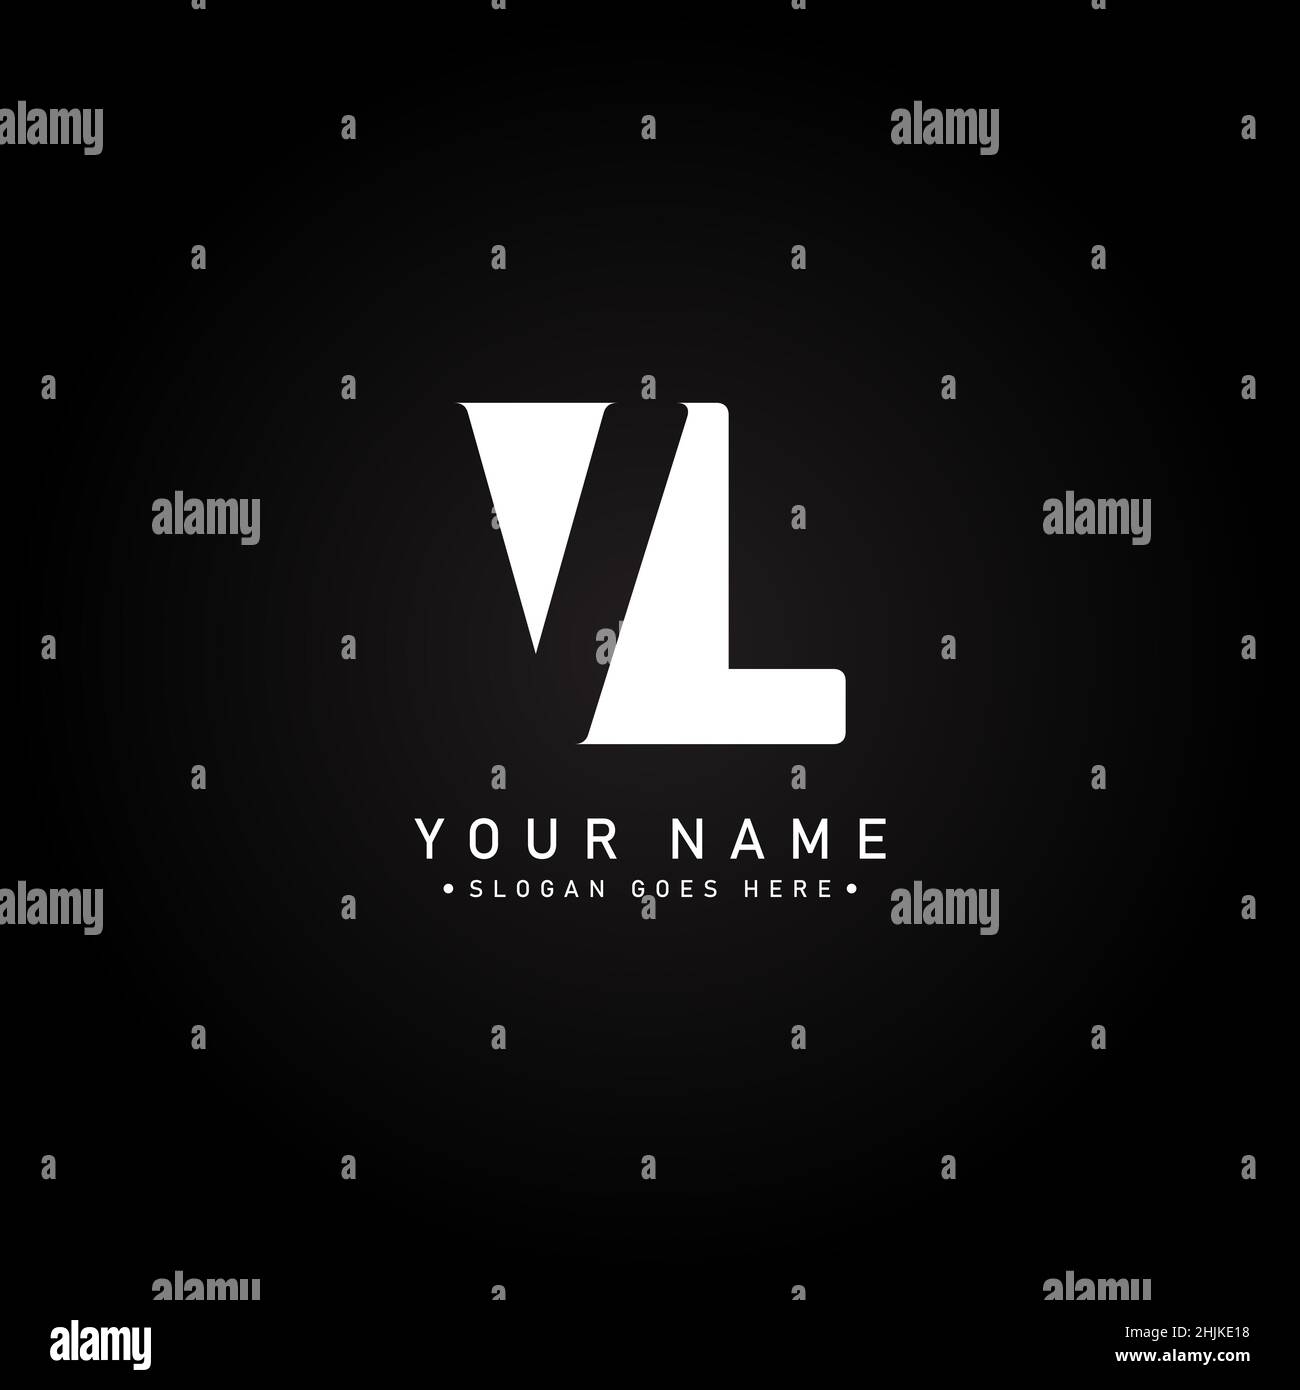 Vl logo monogram with modern style concept design Vector Image